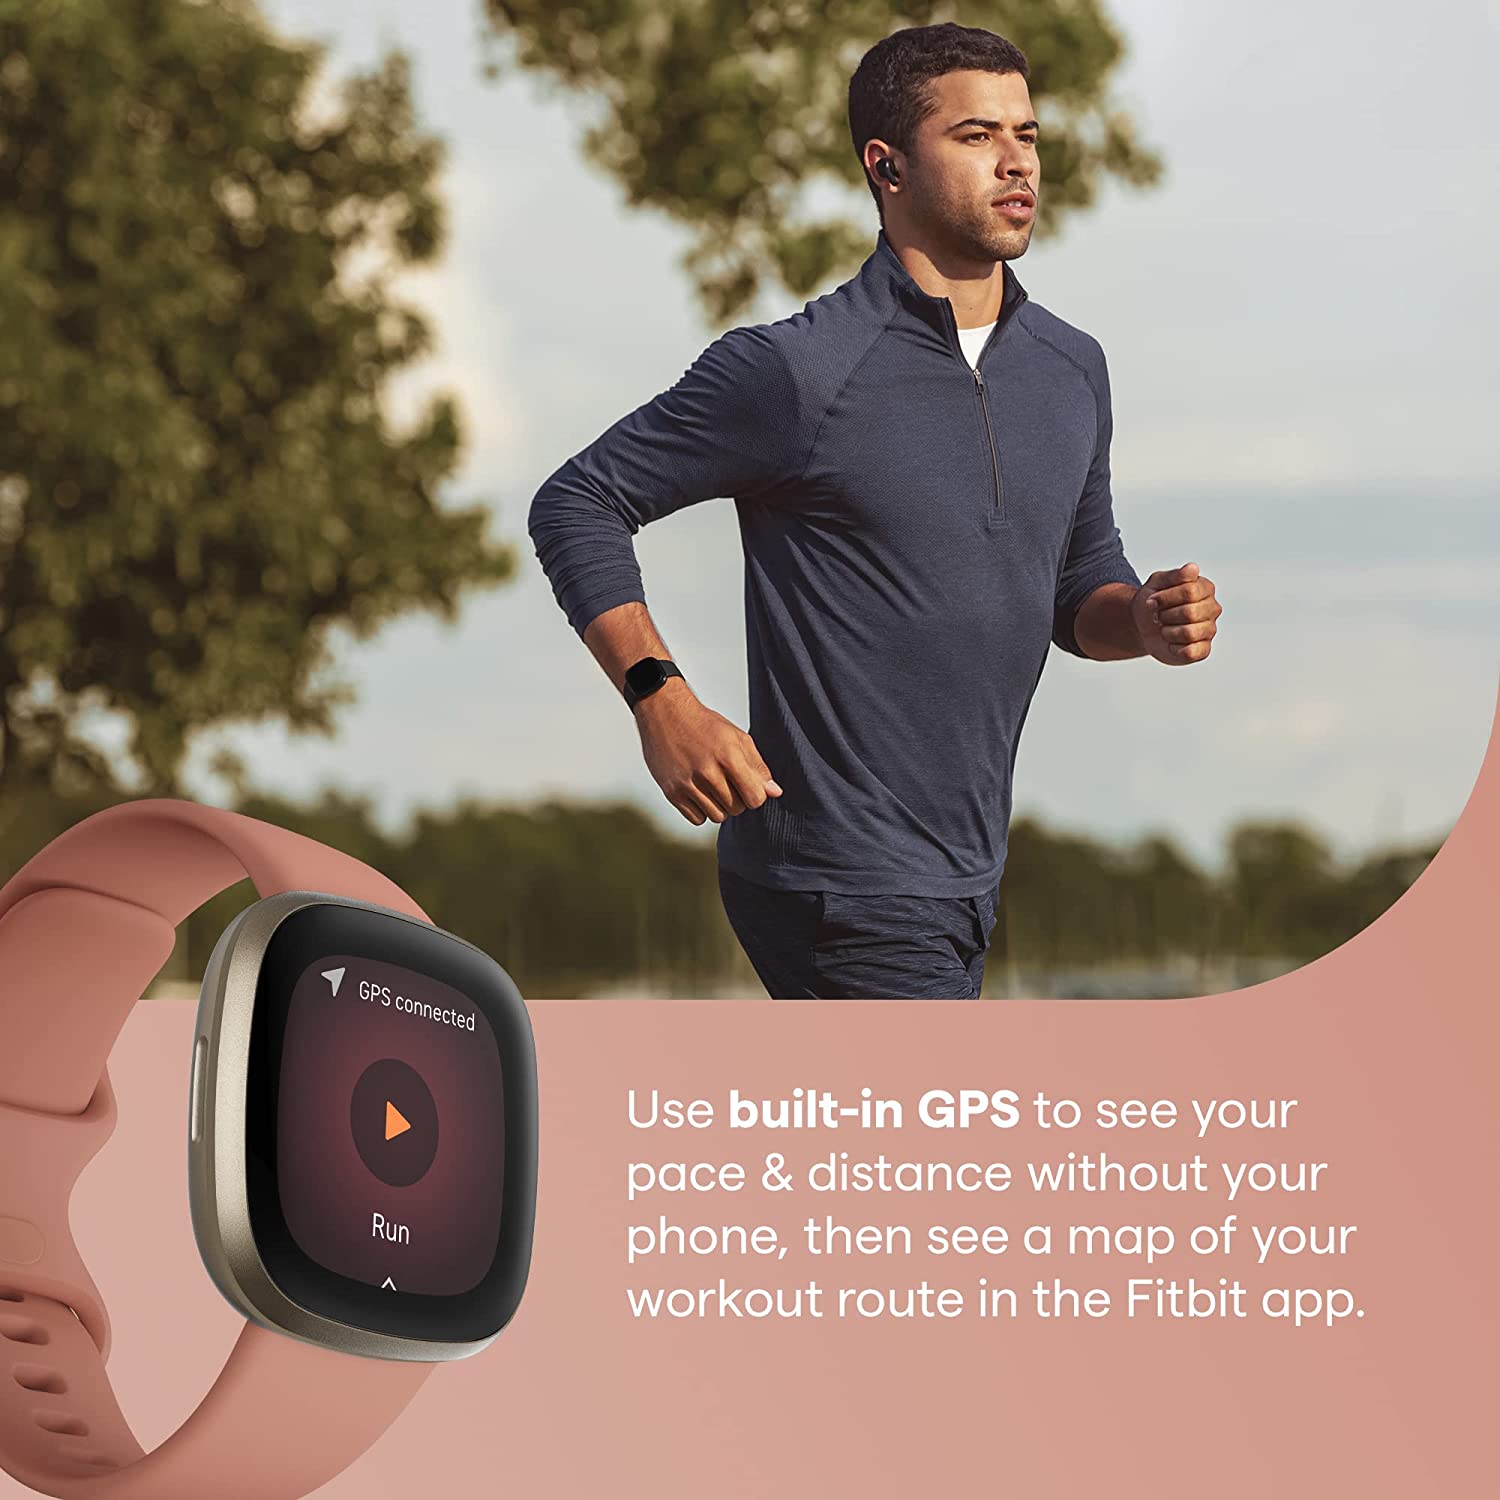 Fitbit Versa 3 Health And Fitness Smart Watch-  Midnight Blue/Soft Gold Aluminum